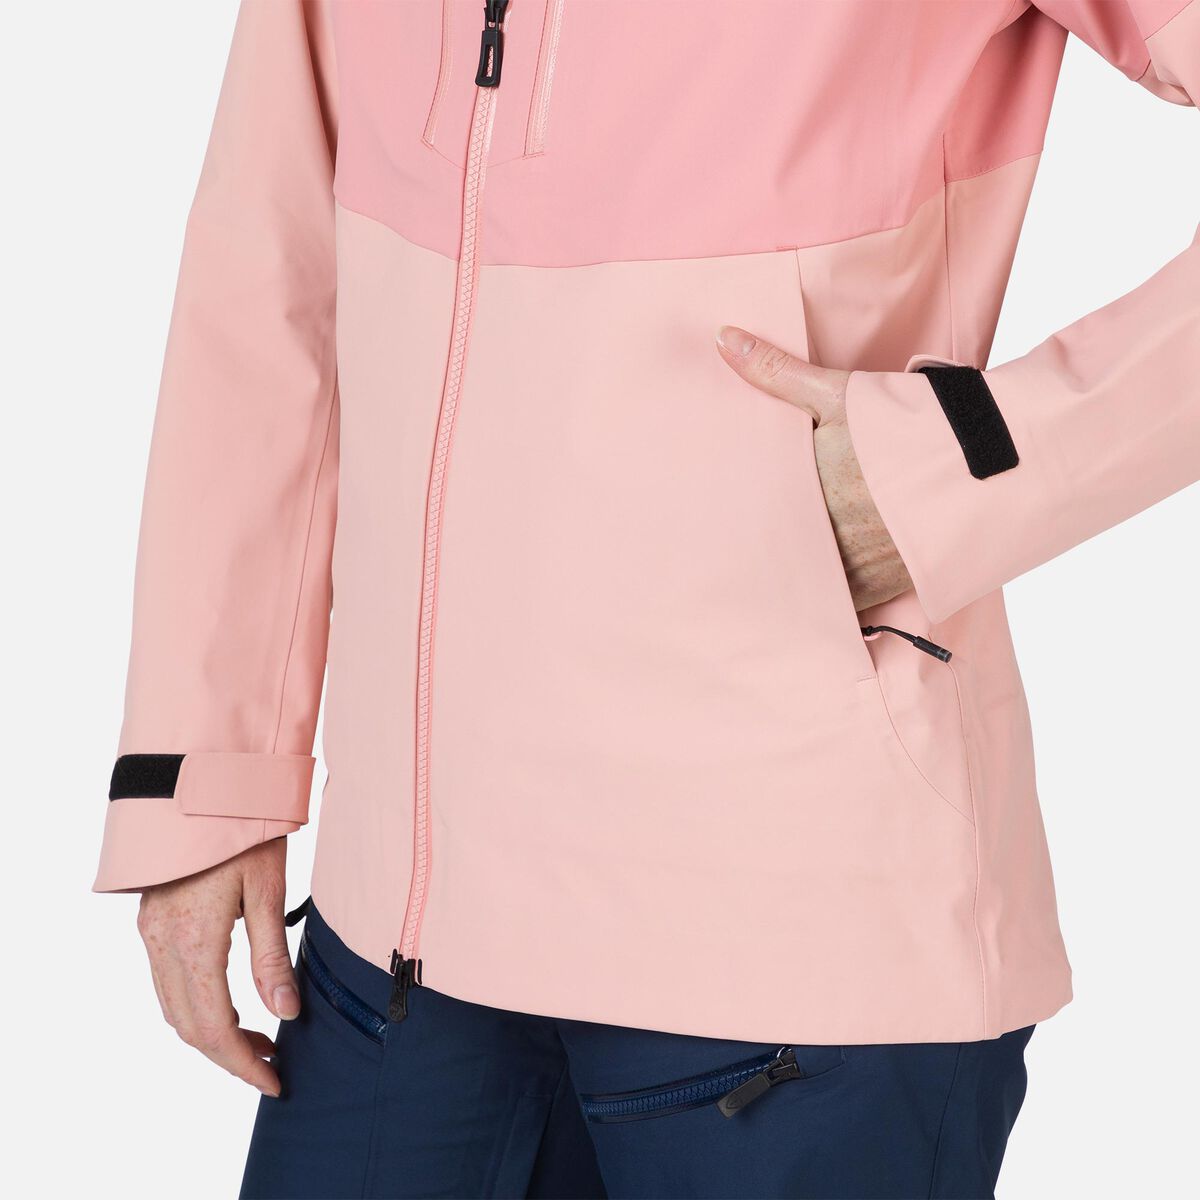 Rossignol Women's Rallybird Ski Jacket pinkpurple